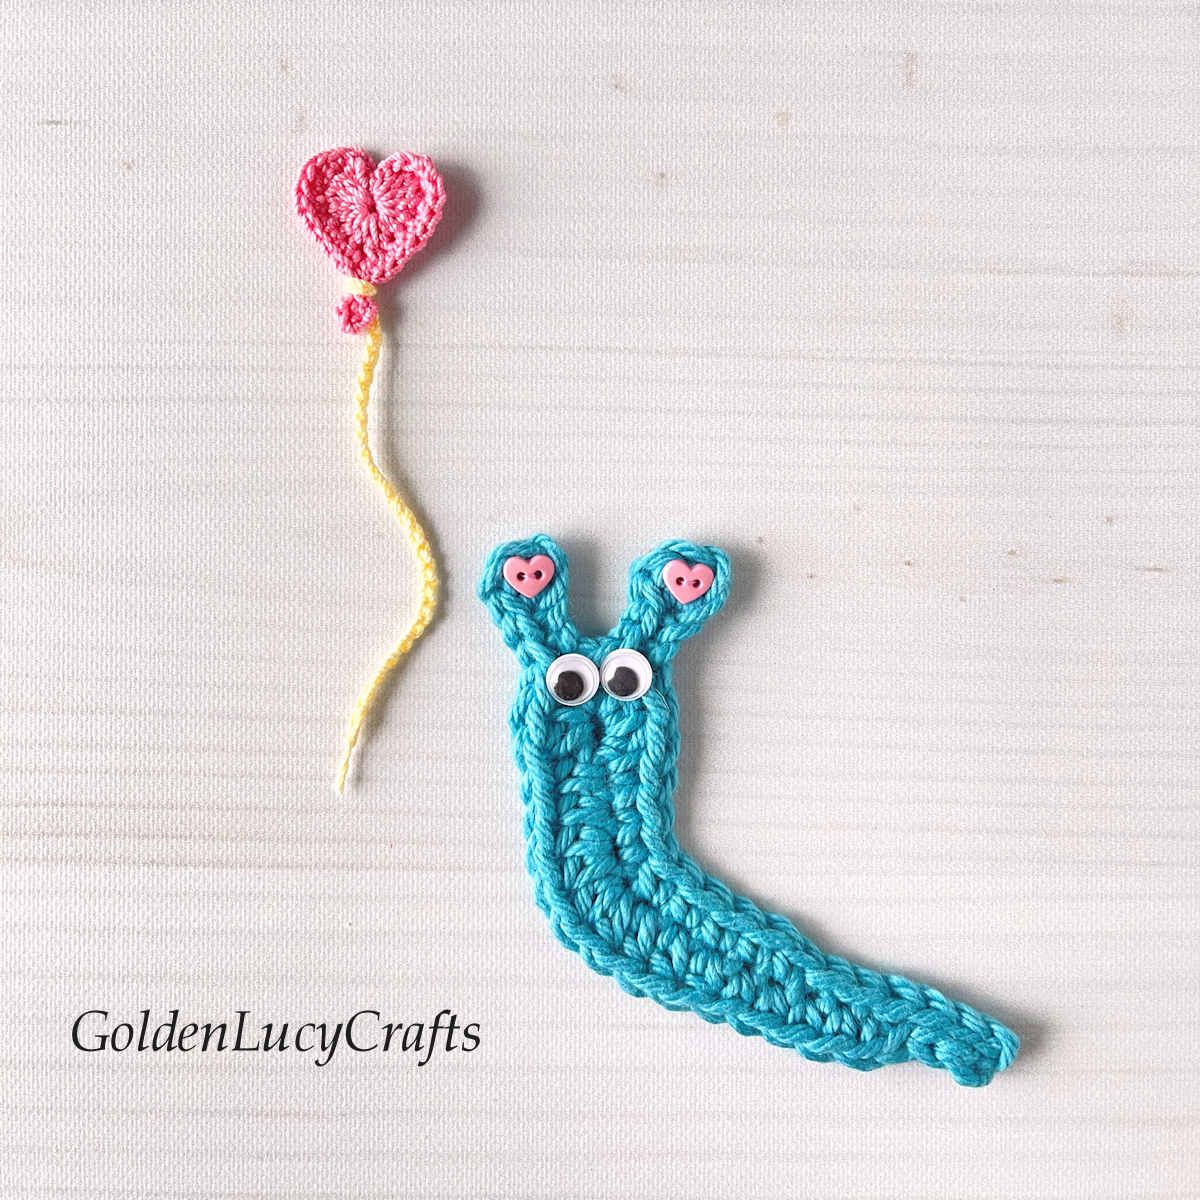 Crochet blue slug applique with pink heart balloon.